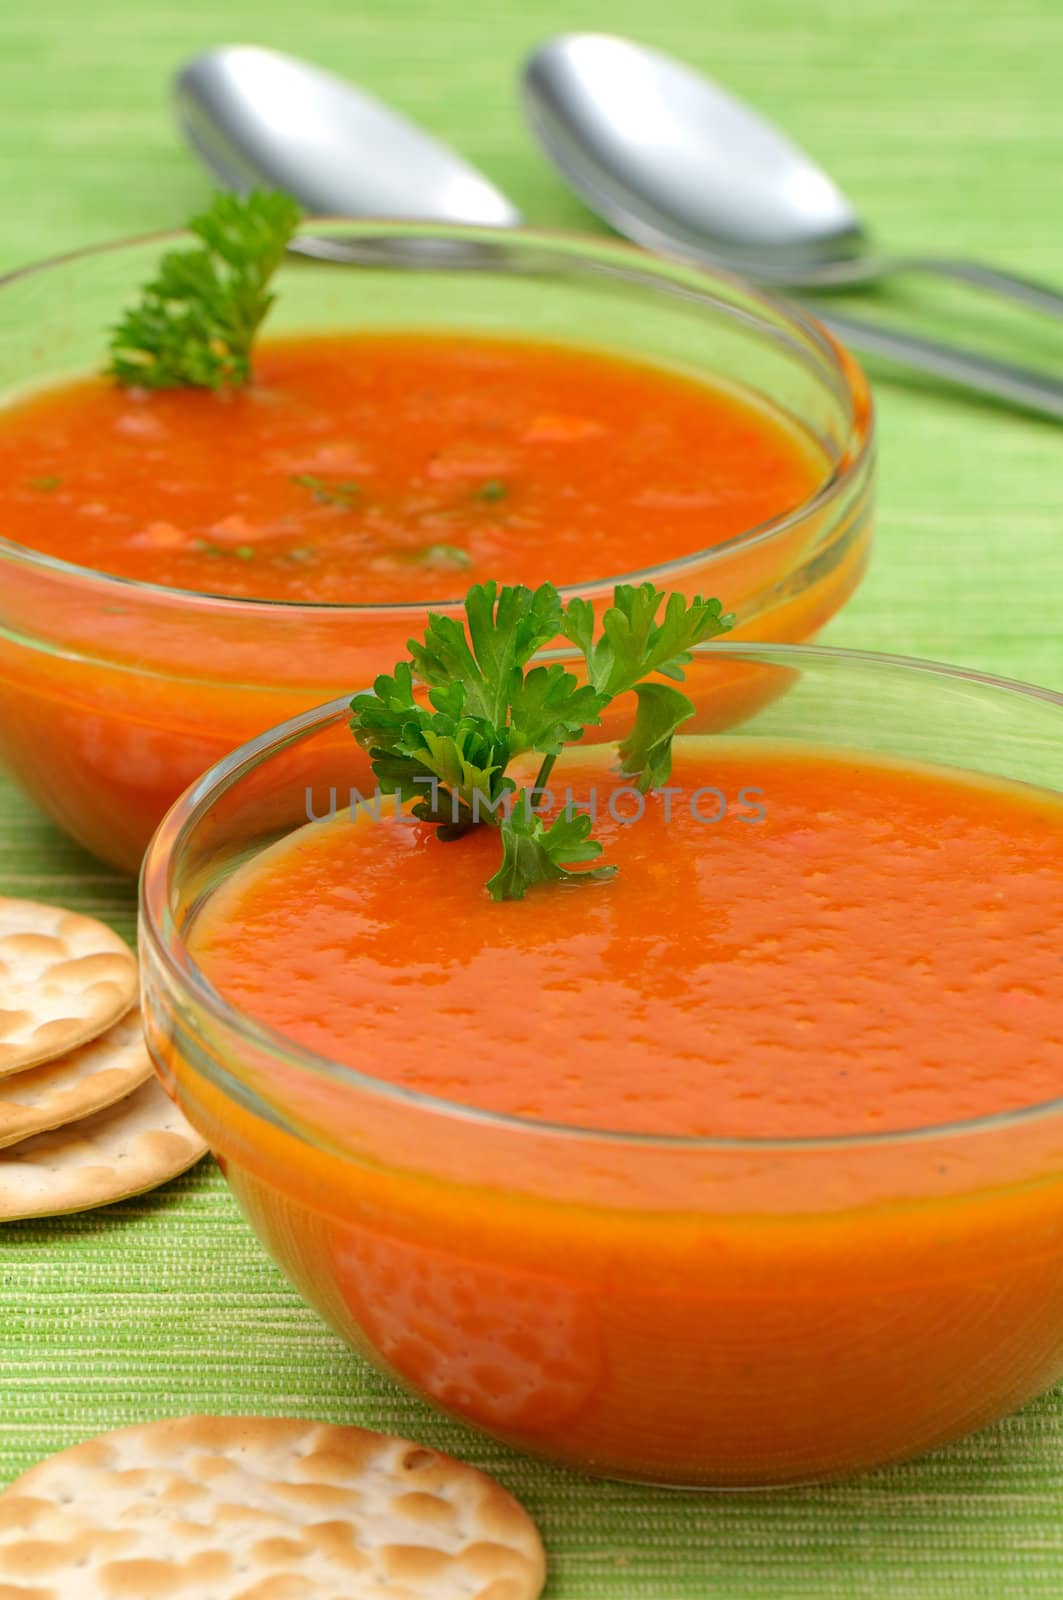 Bowls of tomato soup by Hbak